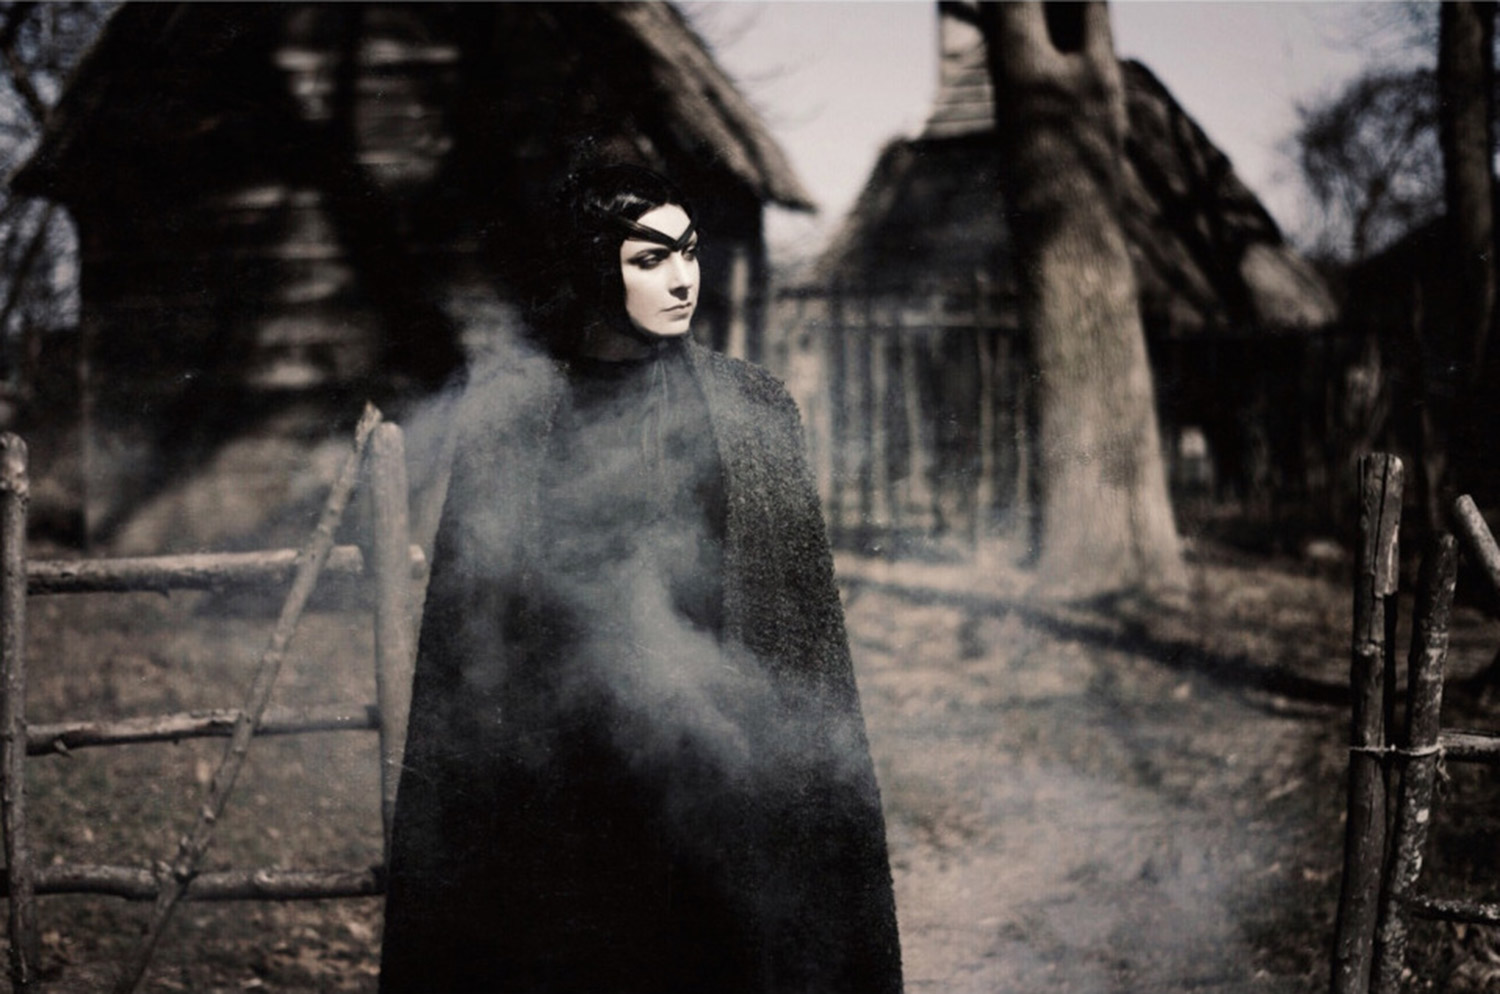 Hogan Mclaughlin - Upon the Heath of Bedlam, photographer Bill Crisafi, single witch-like figure